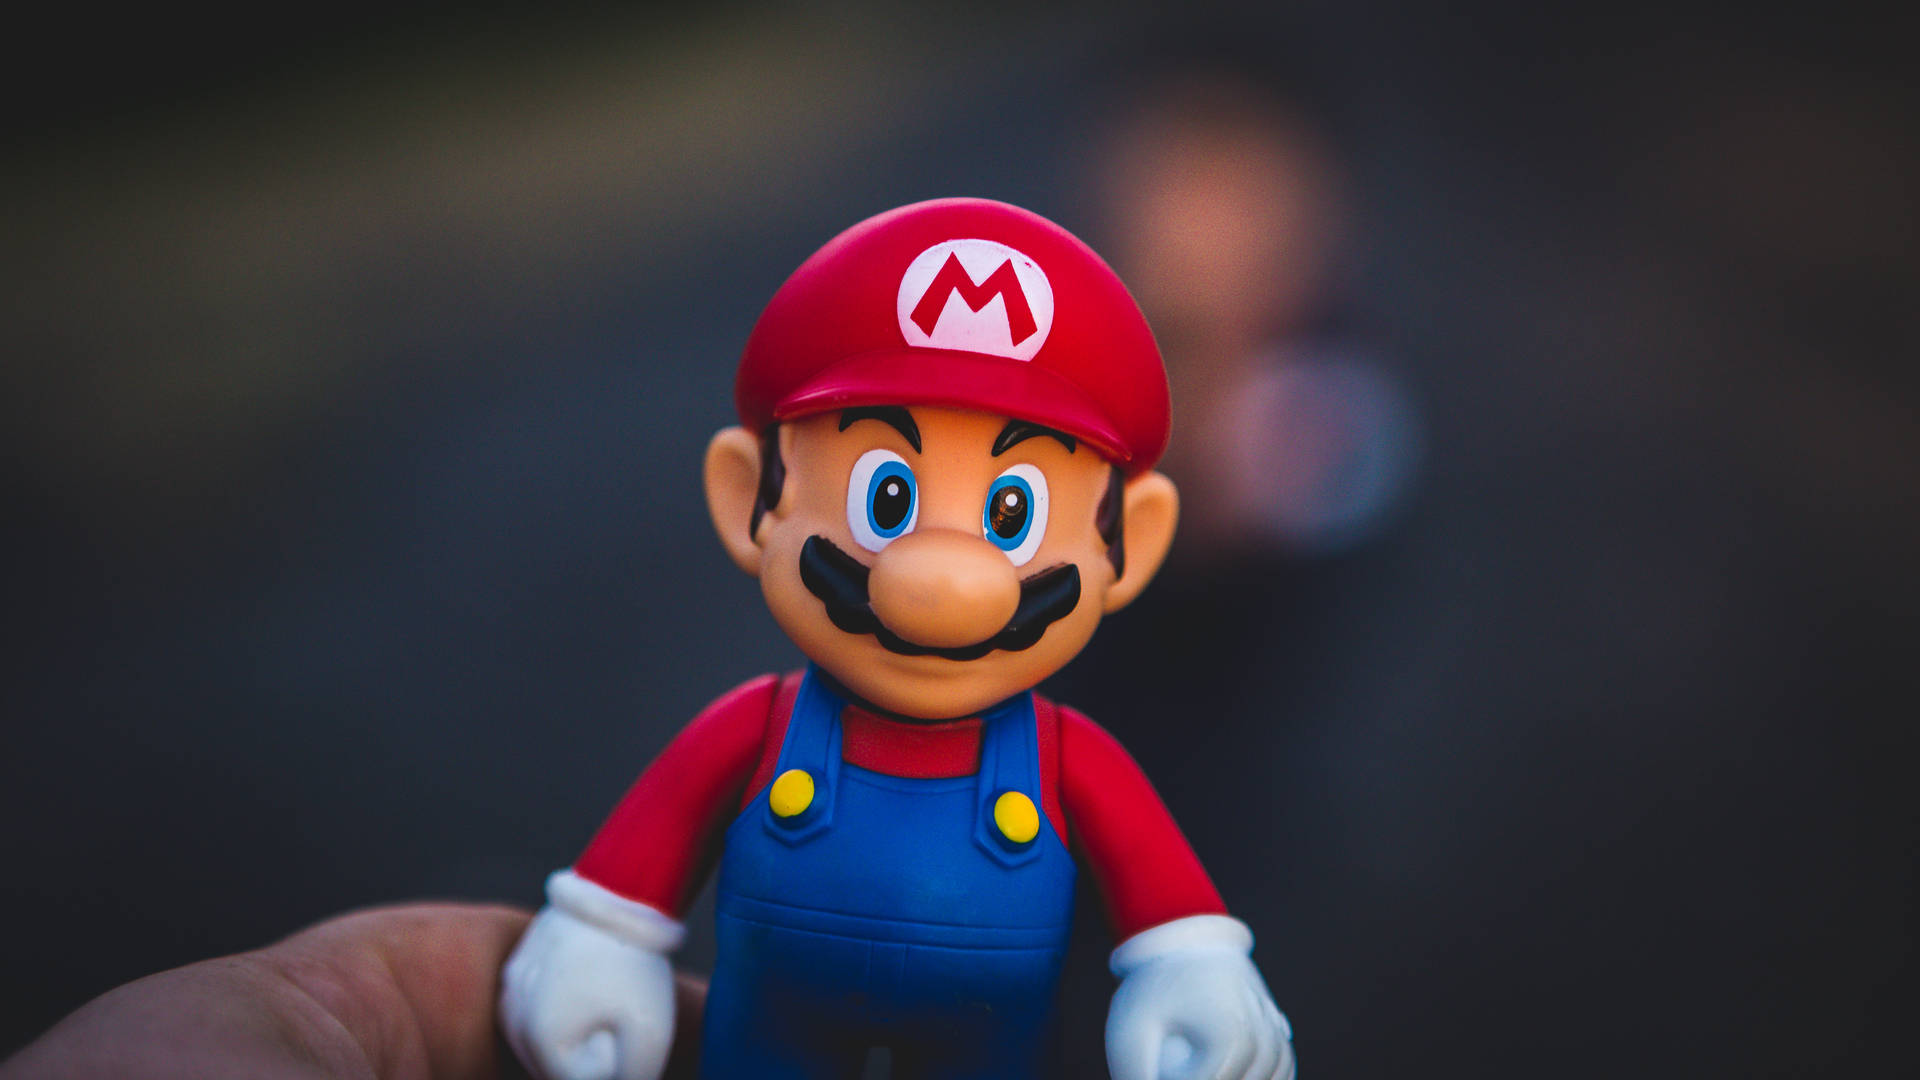 Gamer Super Mario Figurine Picture